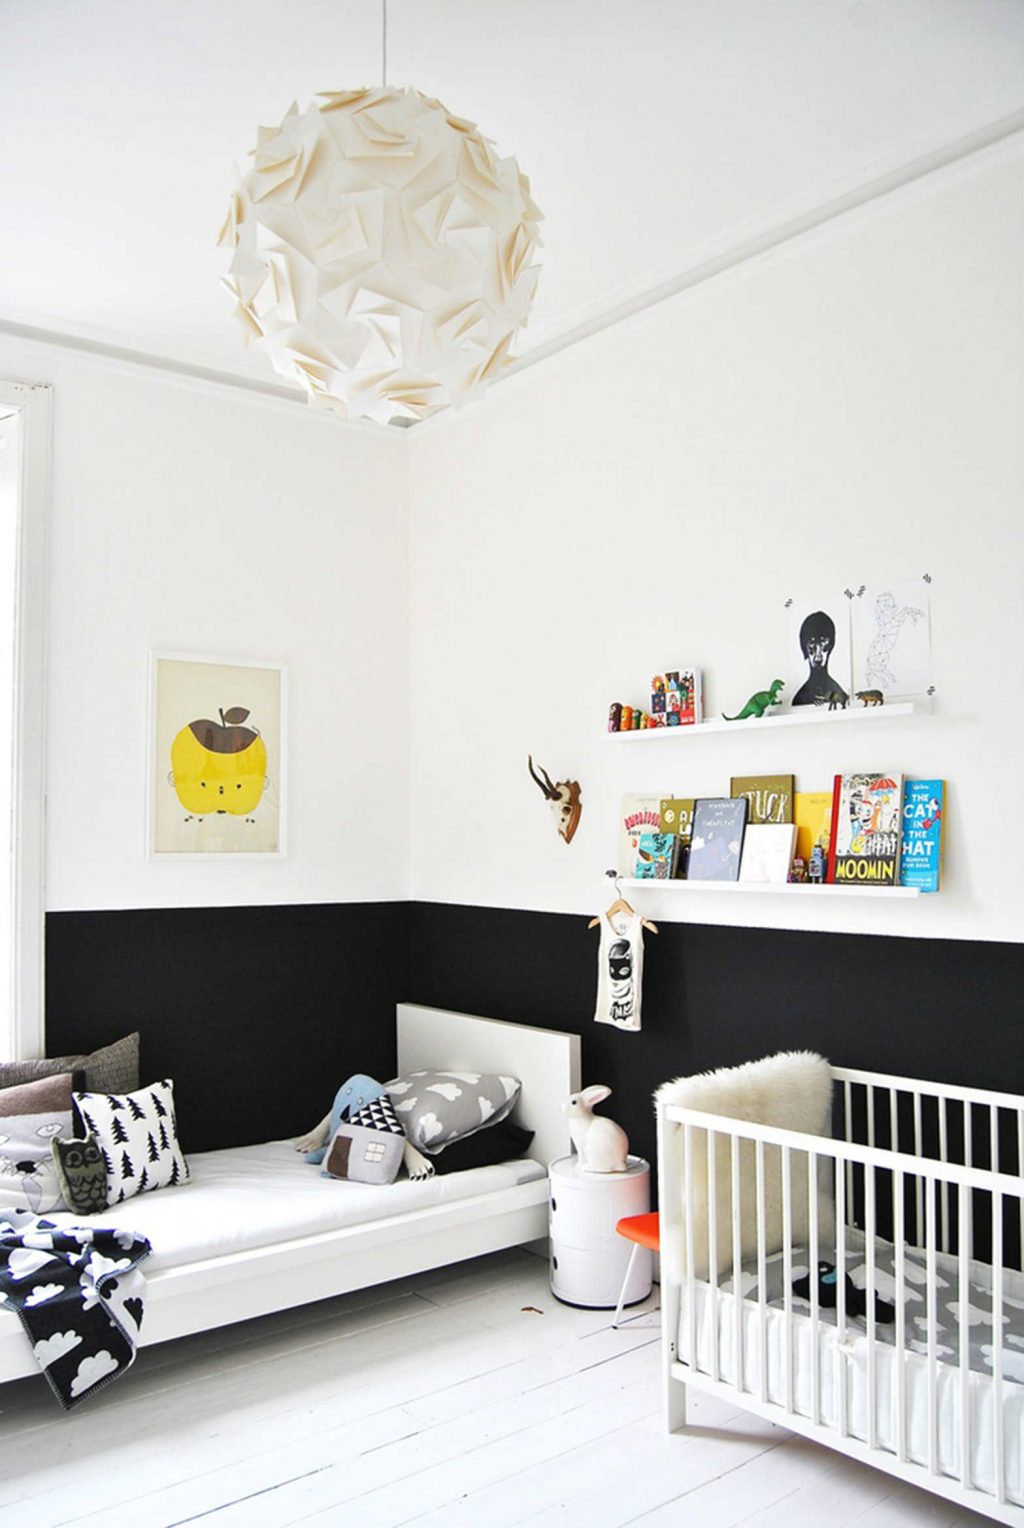 How to get a modern kids bedroom interior design